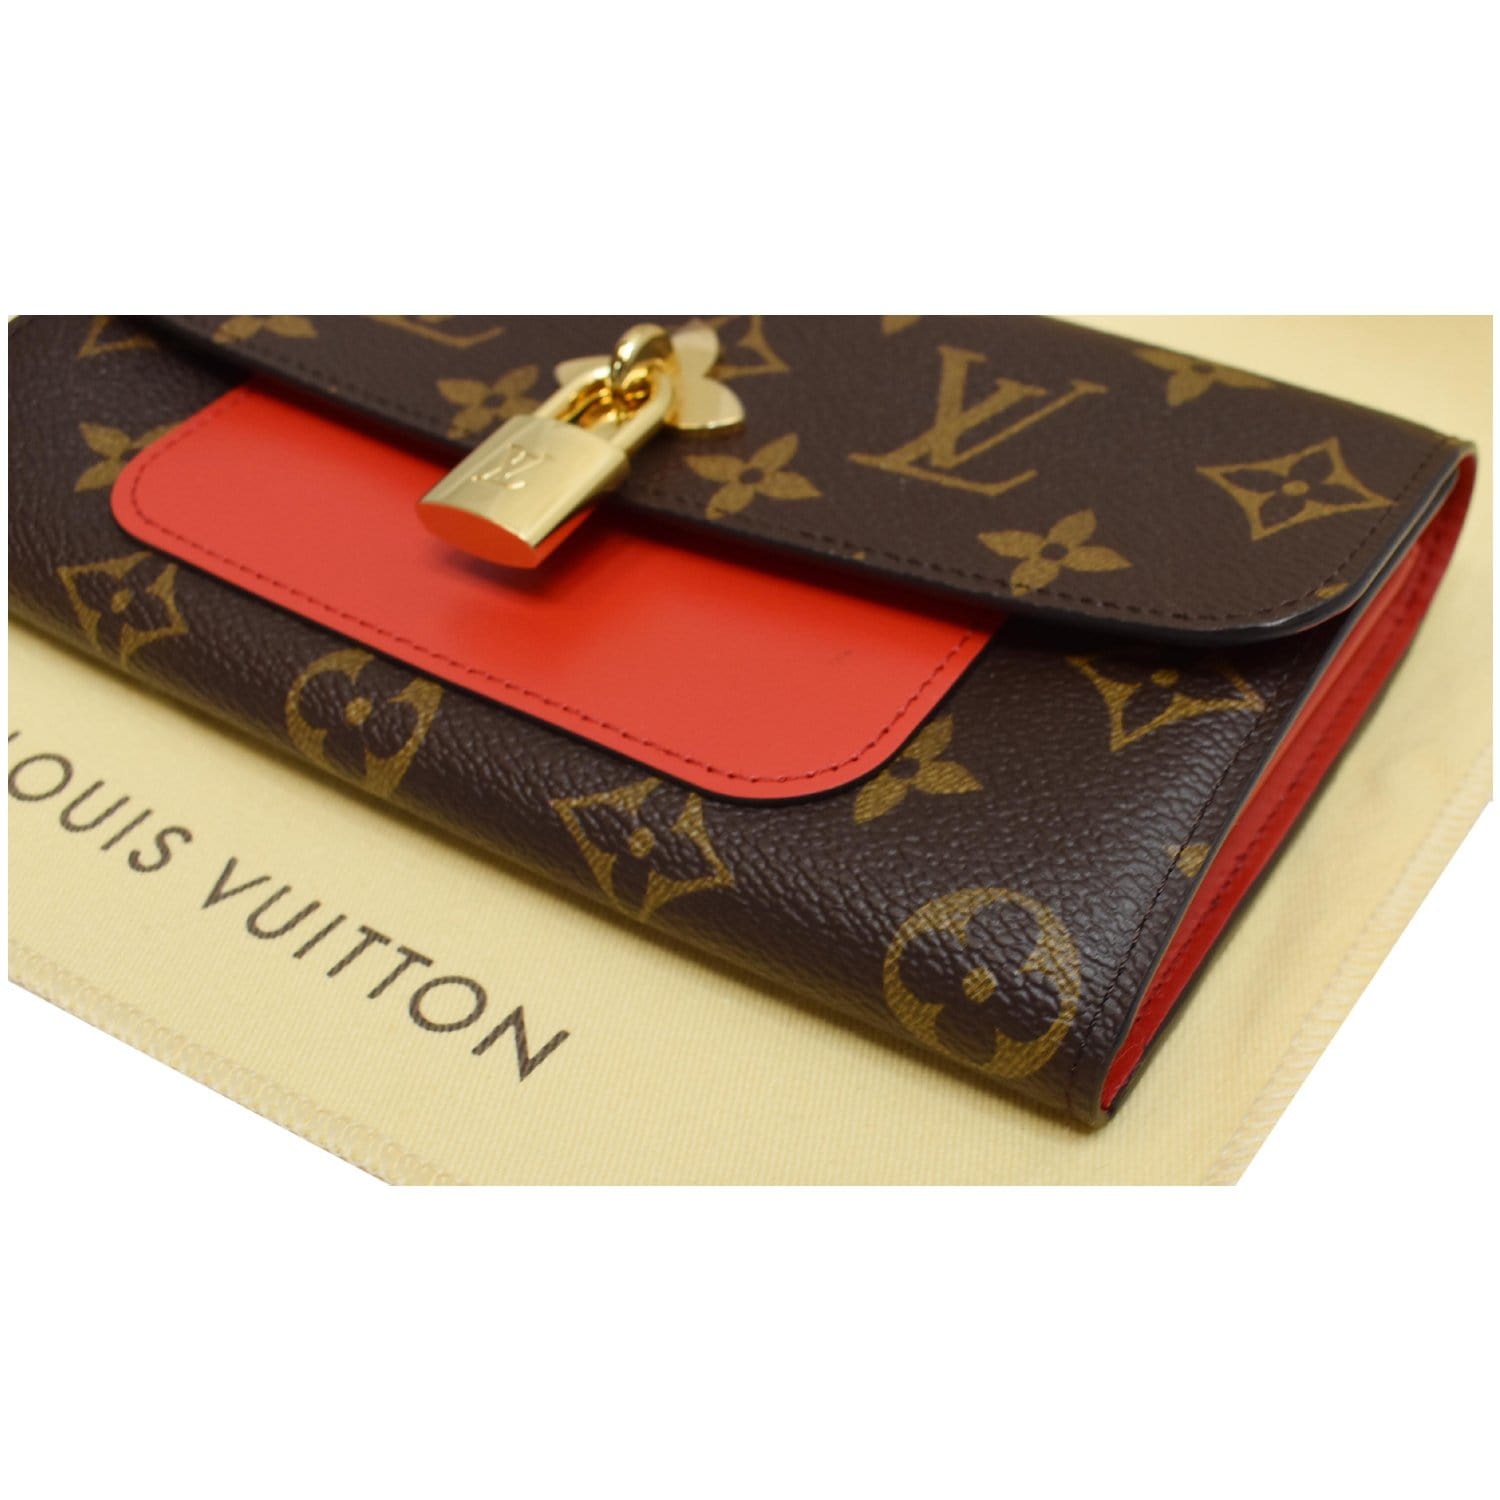 🔥NEW LOUIS VUITTON Clemence Wallet 3D Flower Long Zip Monogram Red RARE  GIFT❤️